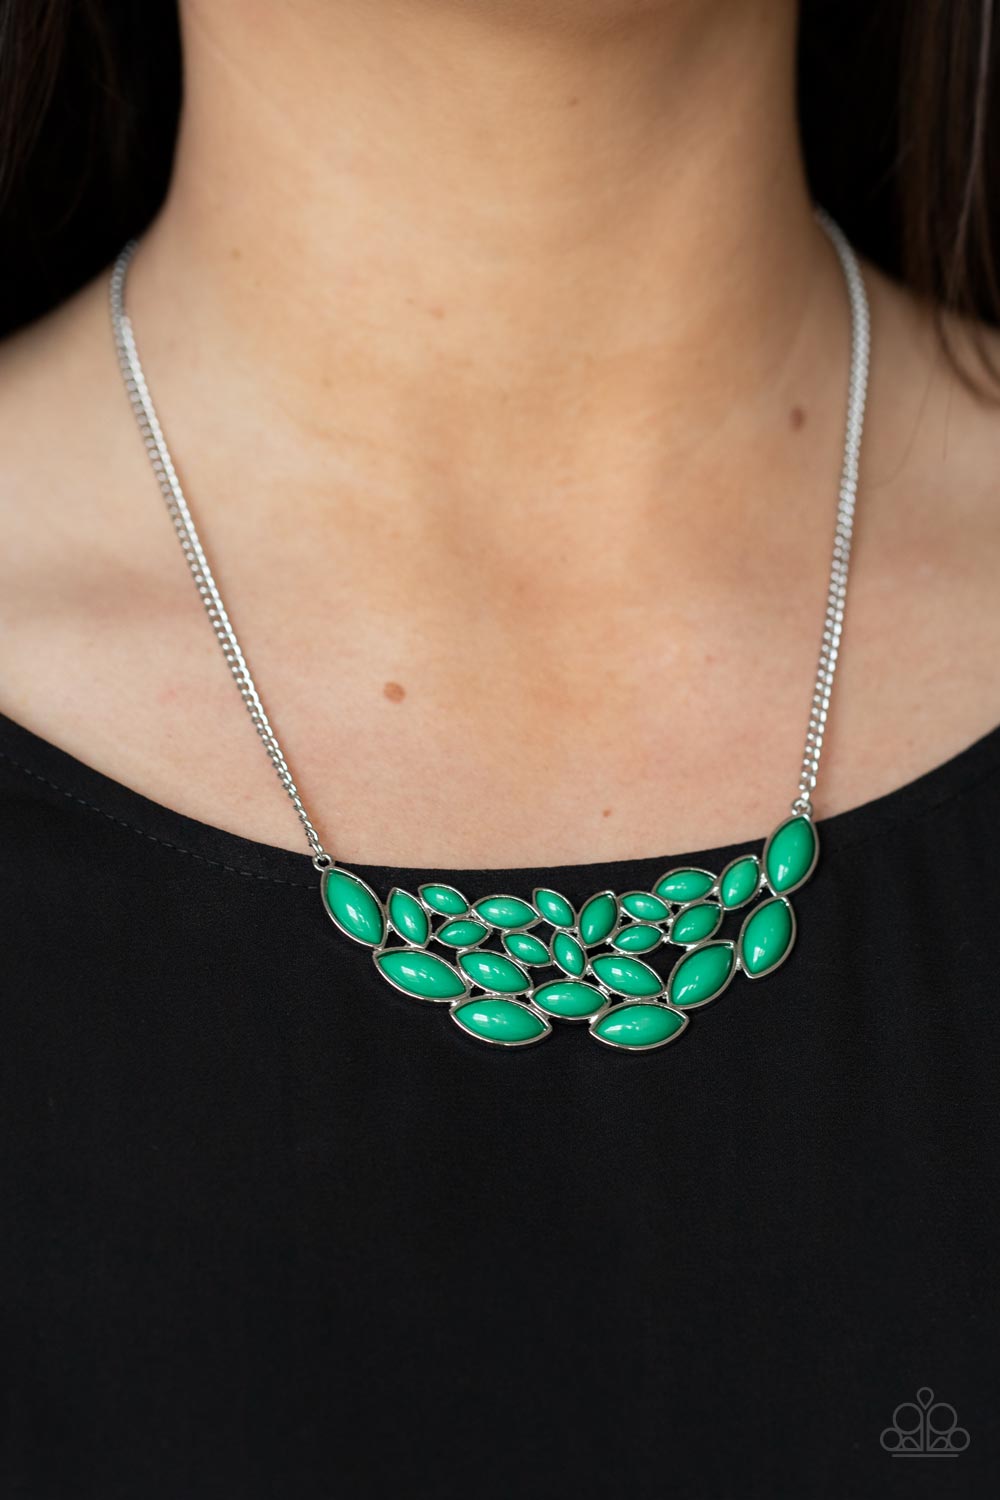 PRE-ORDER - Paparazzi Eden Escape - Green - Necklace & Earrings - $5 Jewelry with Ashley Swint